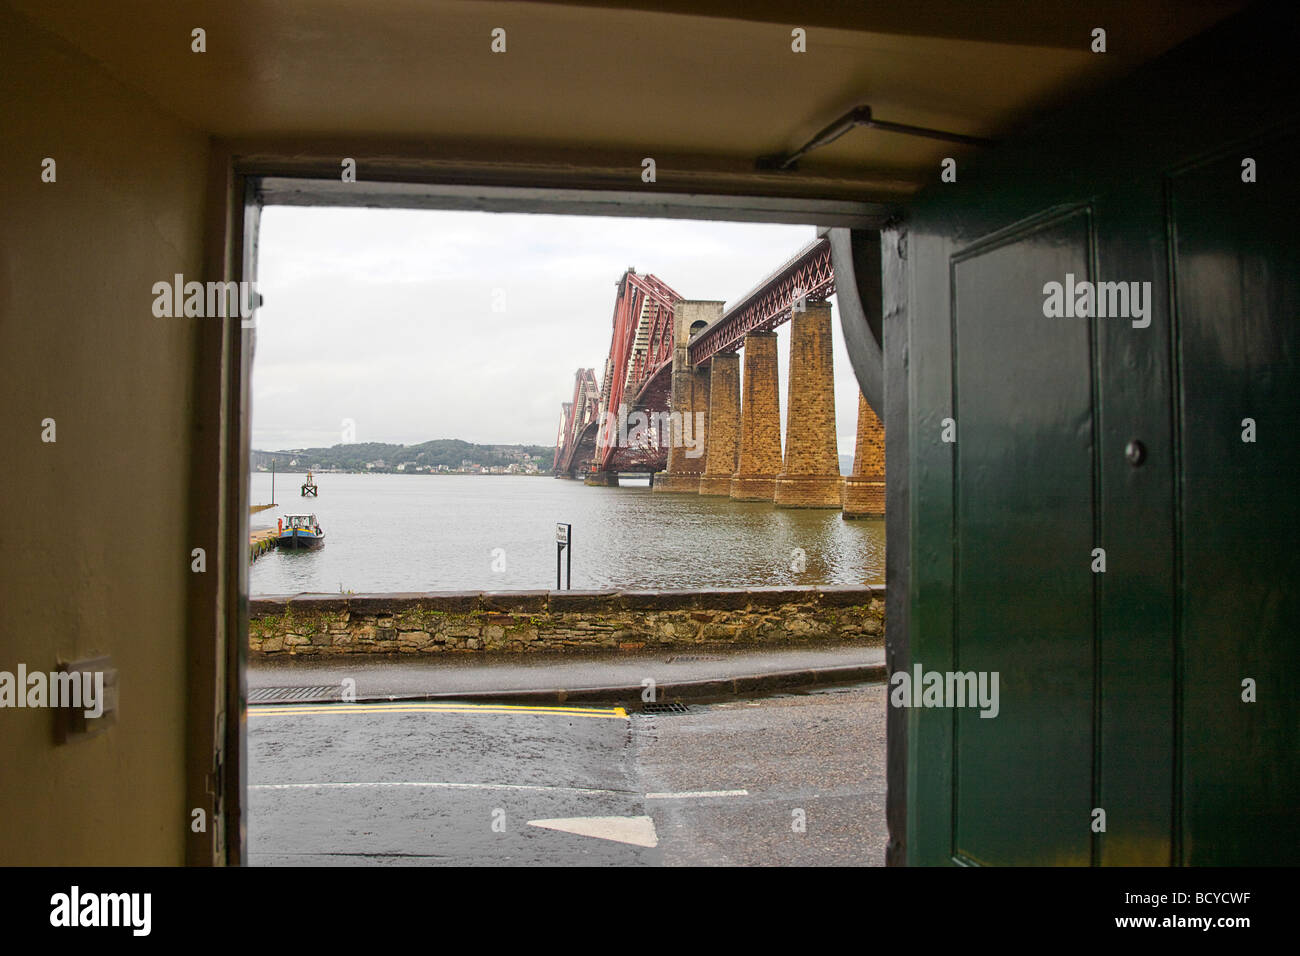 El Forth Bridge es un puente de ferrocarril en voladizo sobre el Firth of Forth Foto de stock